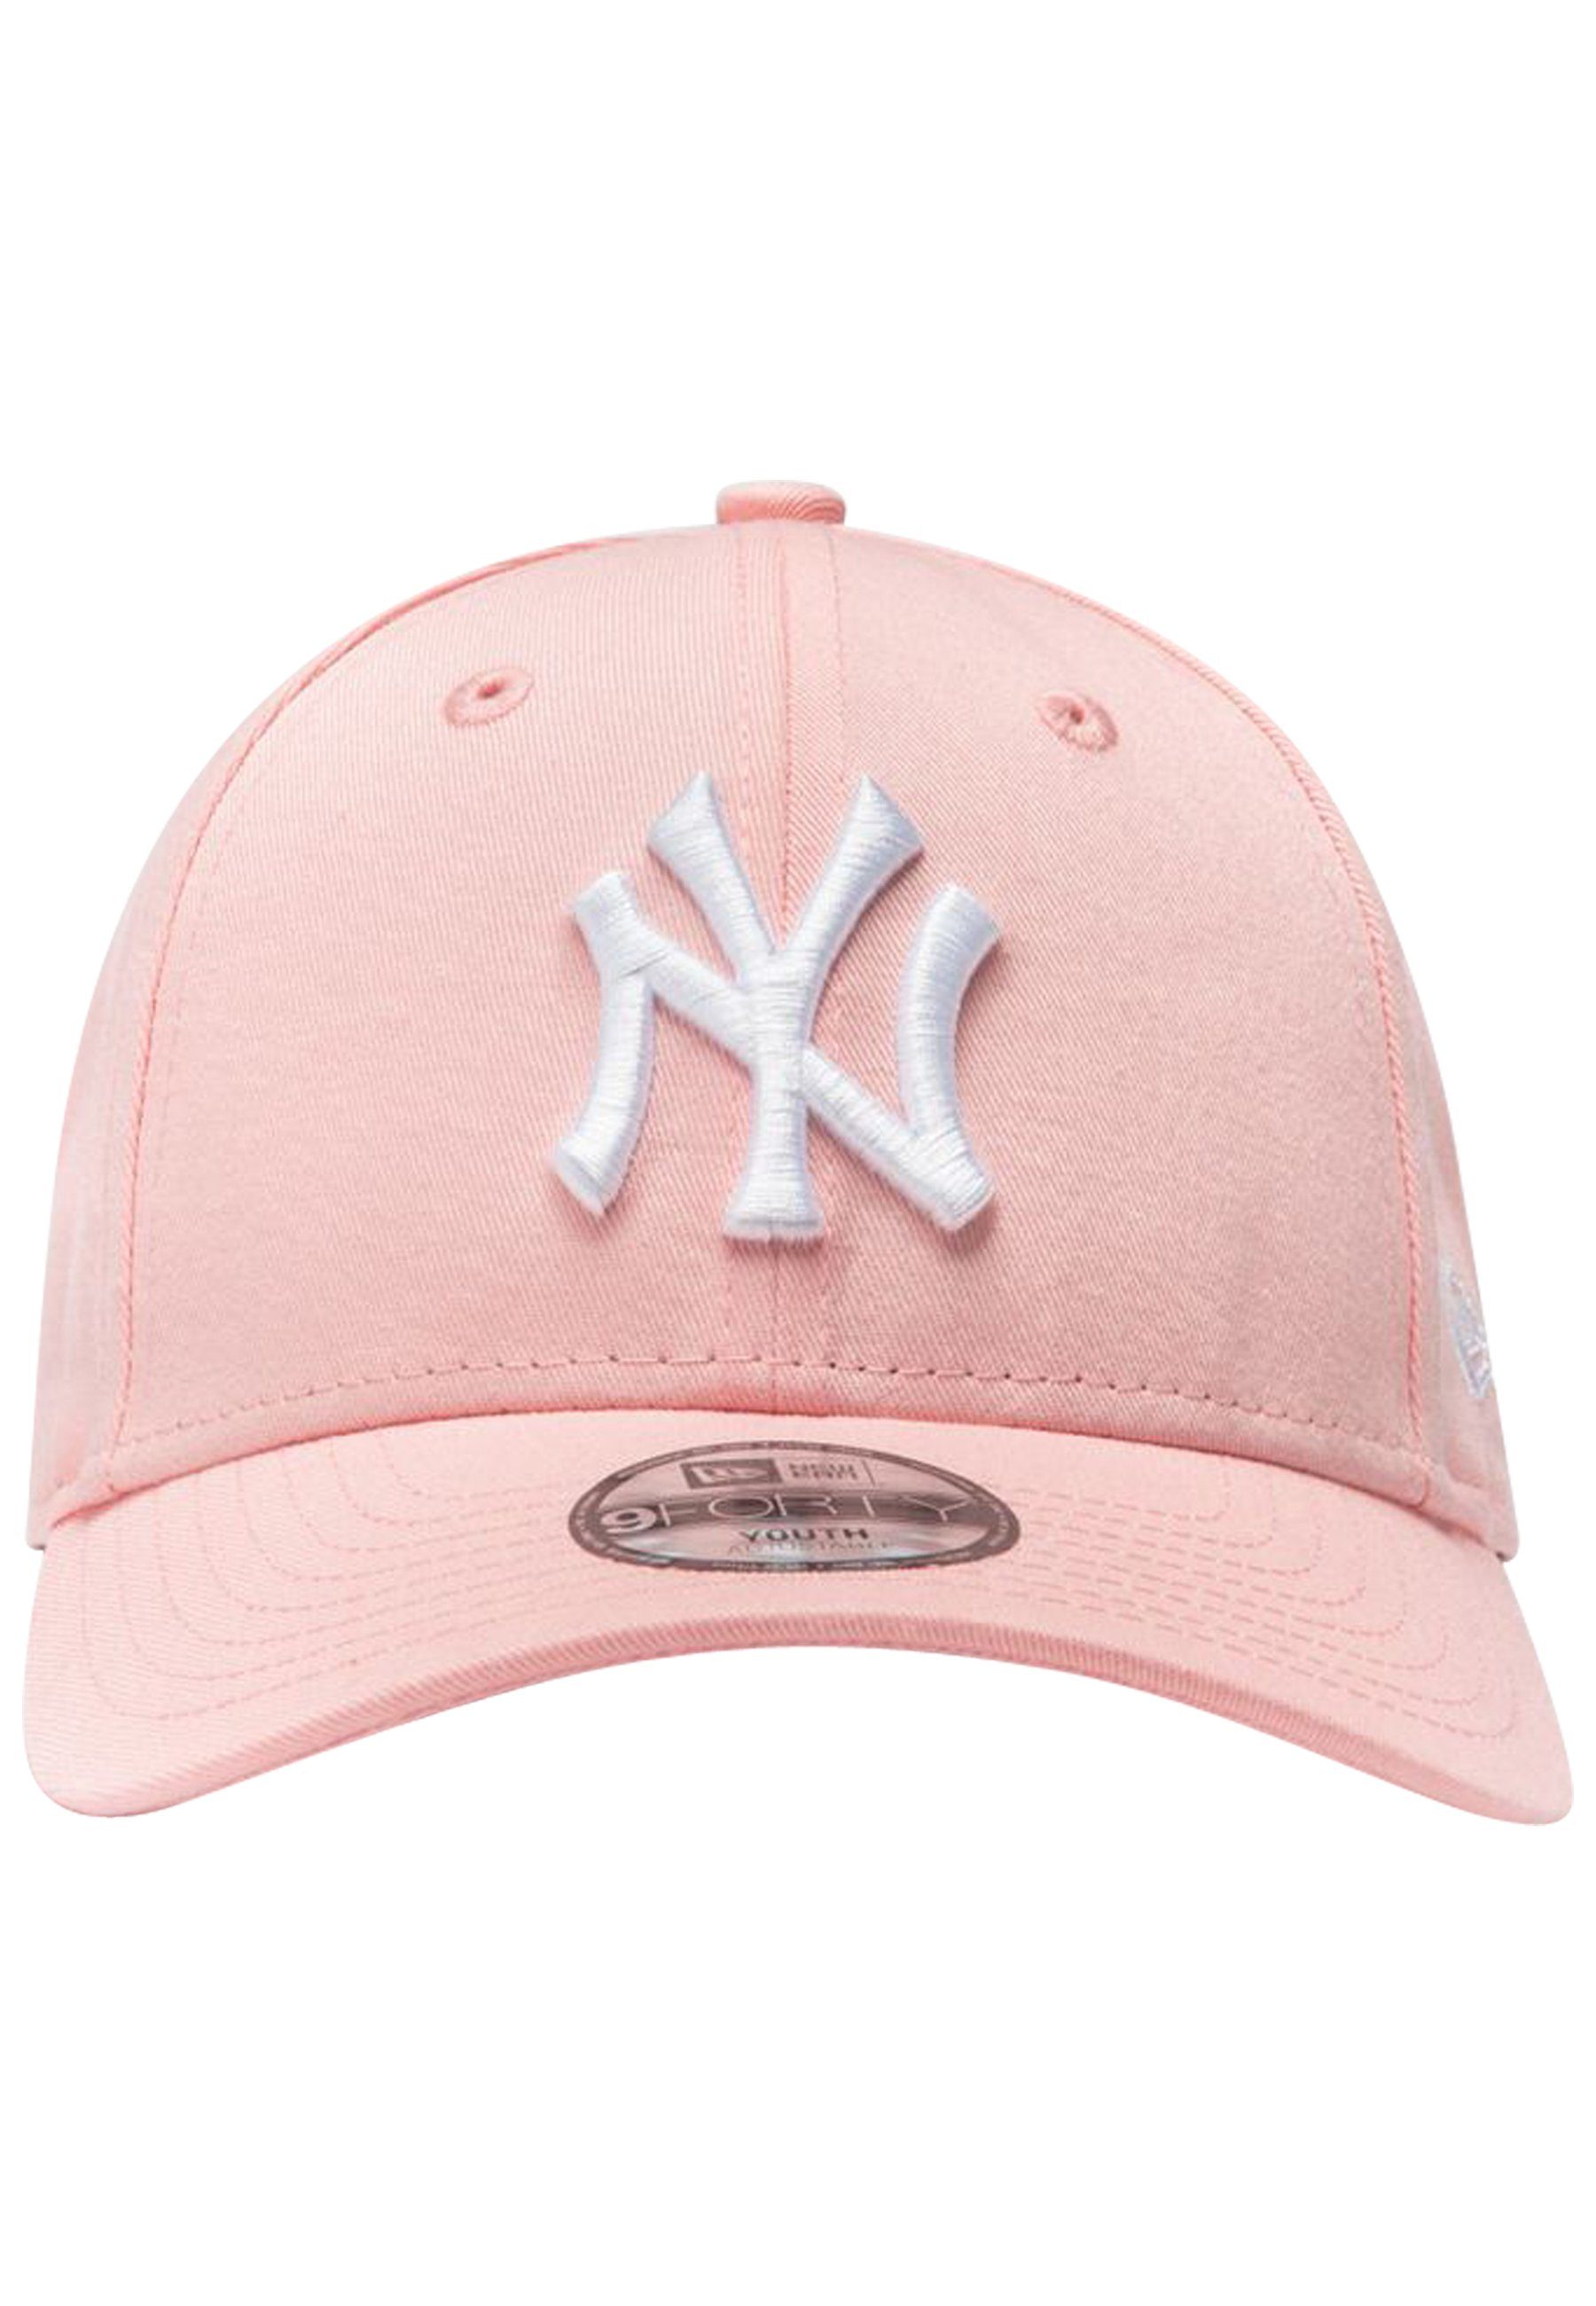 Essential (1-St) League Snapback Cap Era New 940 Pink